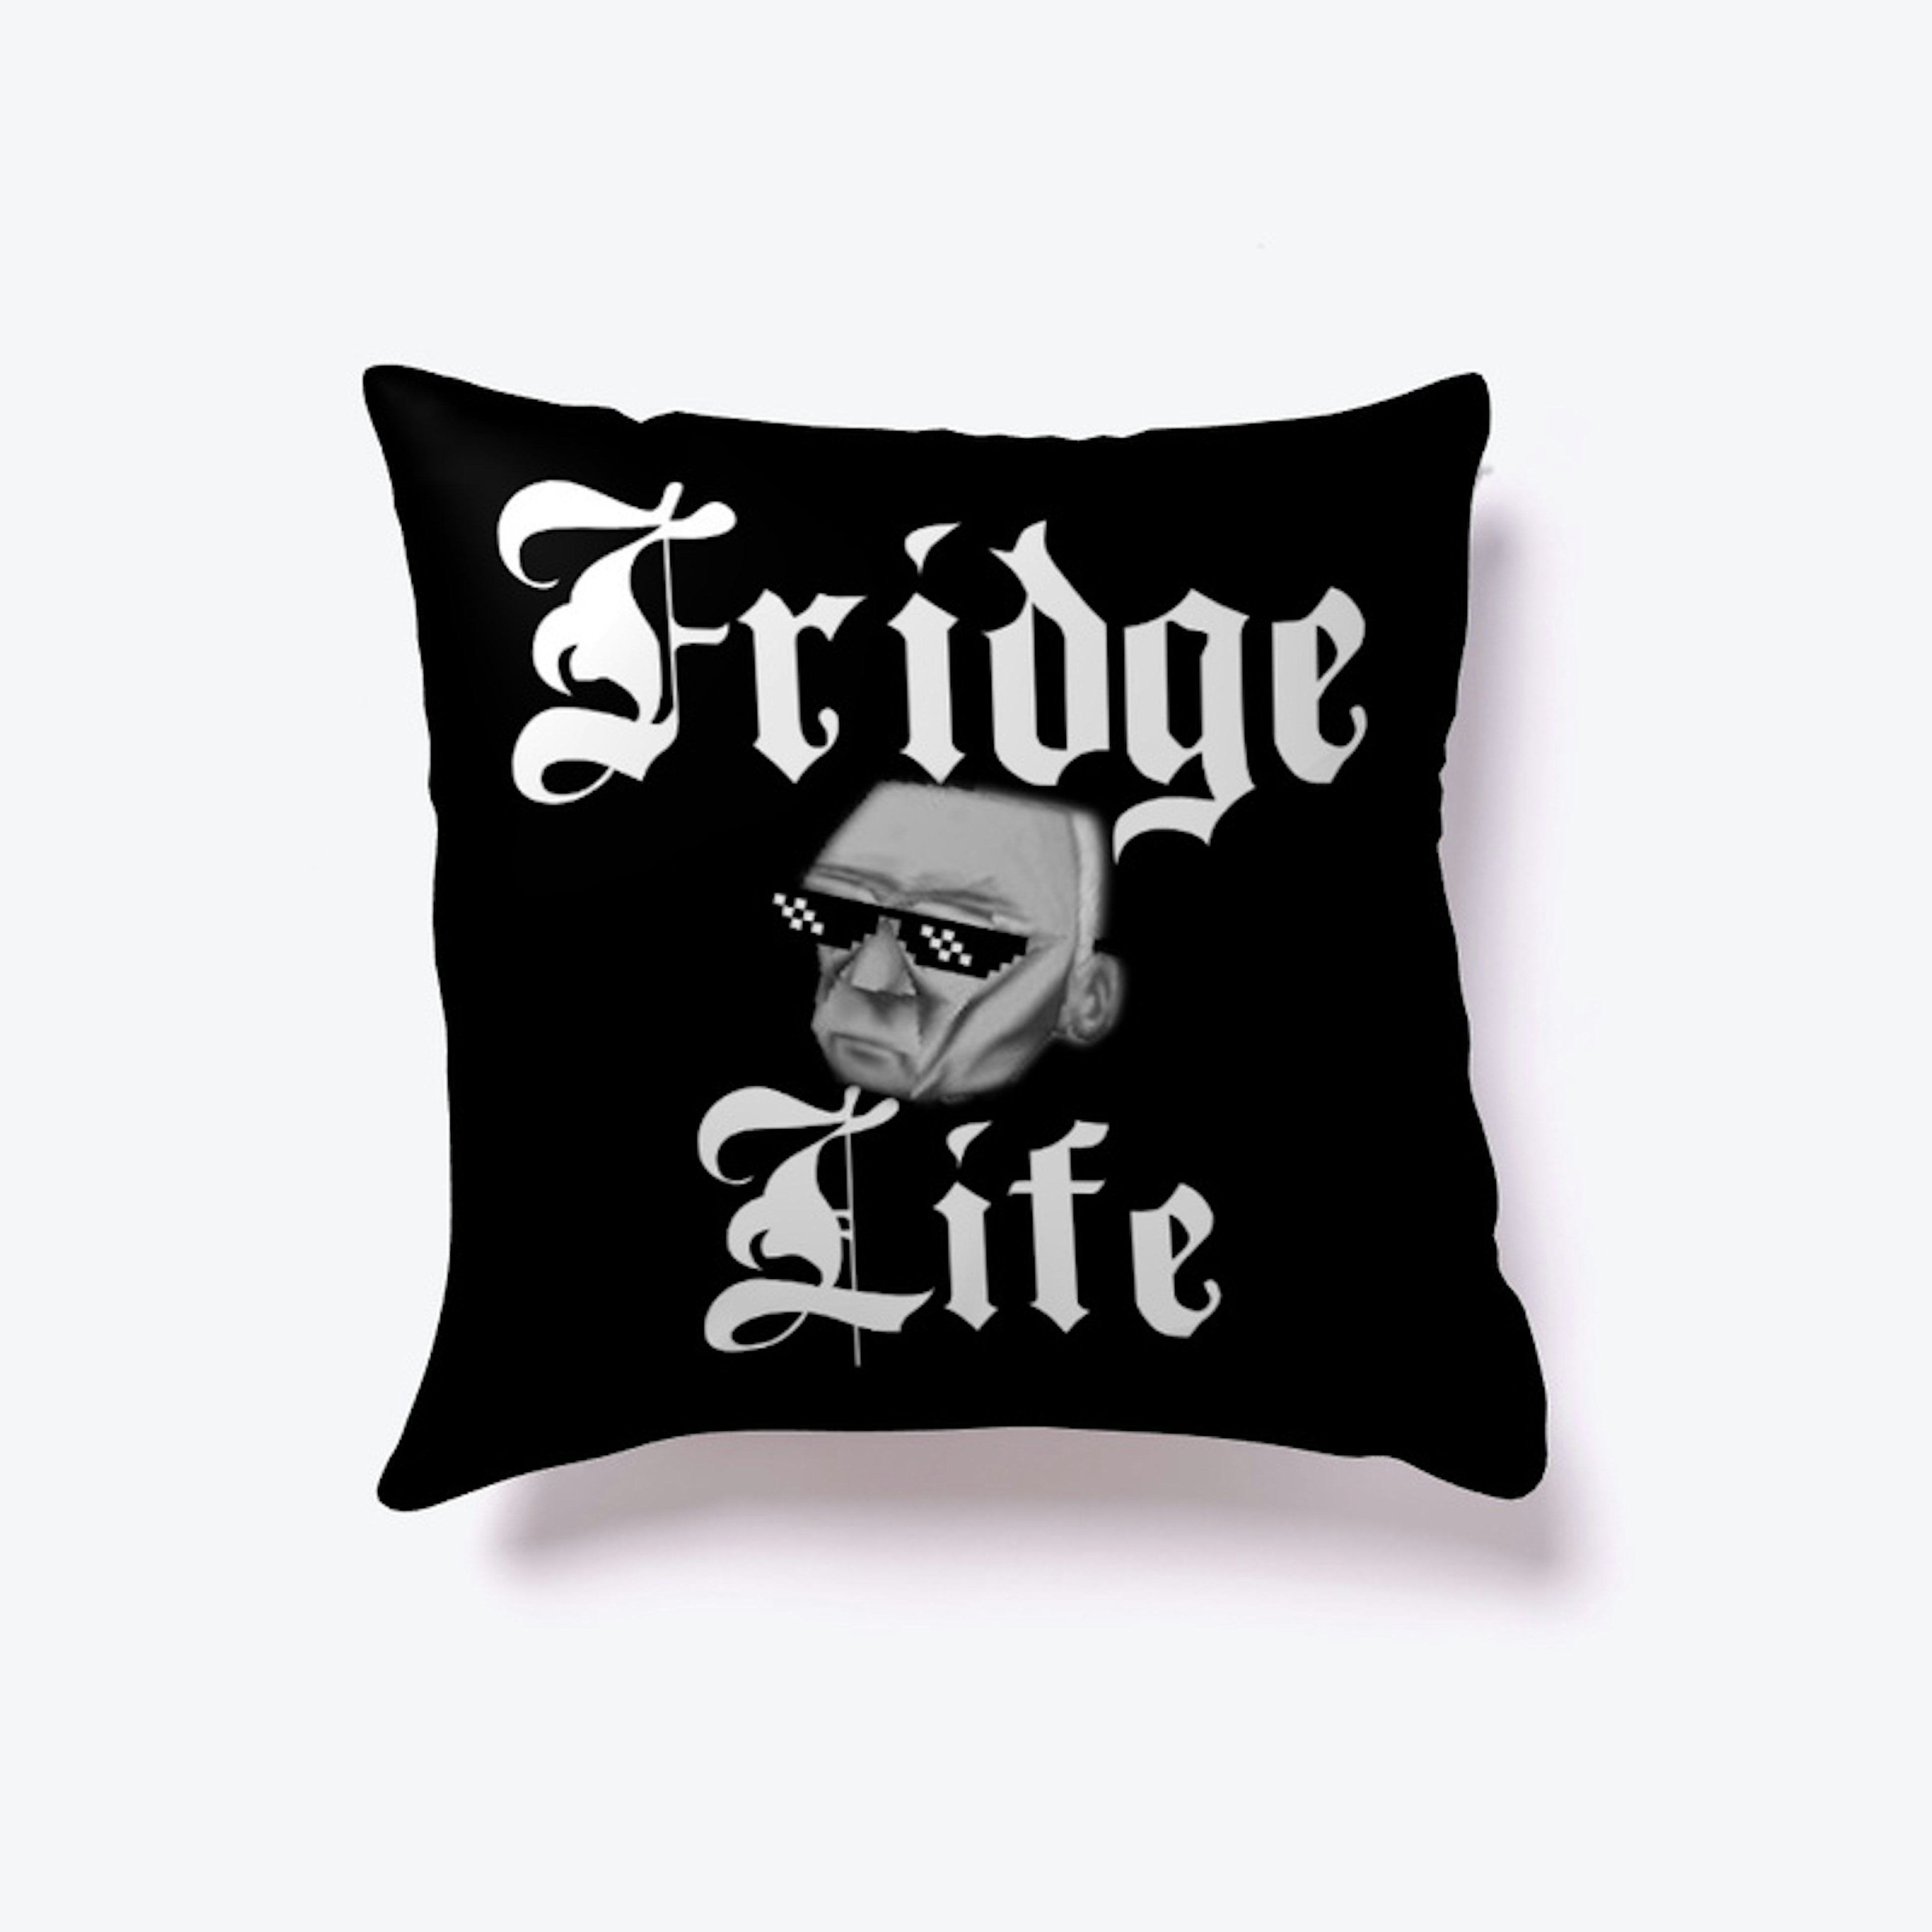 Fridge Life